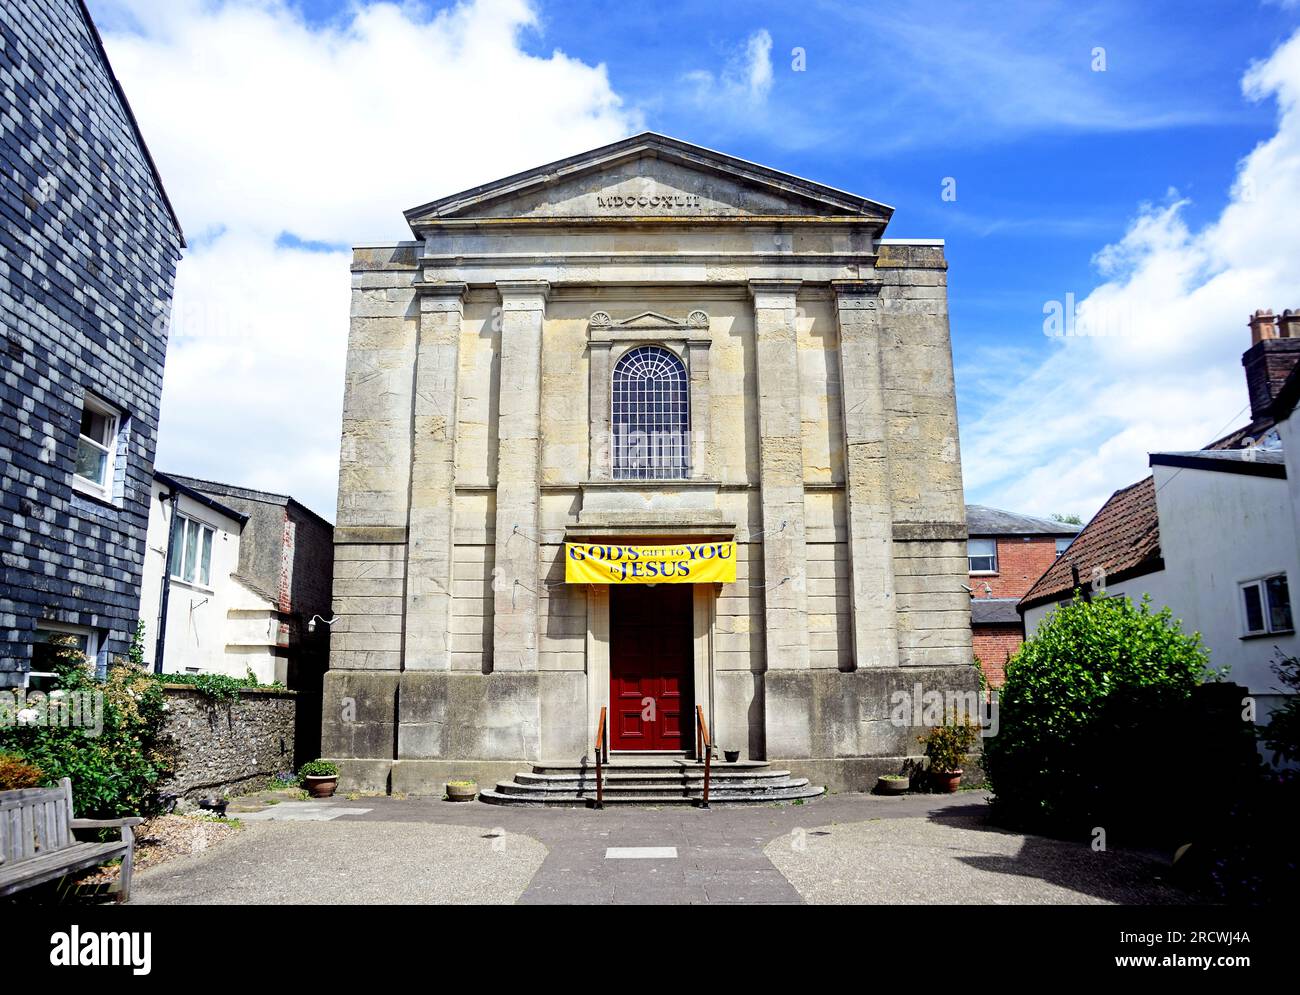 Front view of Chard Baptist Church along Holyrood Street, Chard, Somerset, UK, Europe. Stock Photo